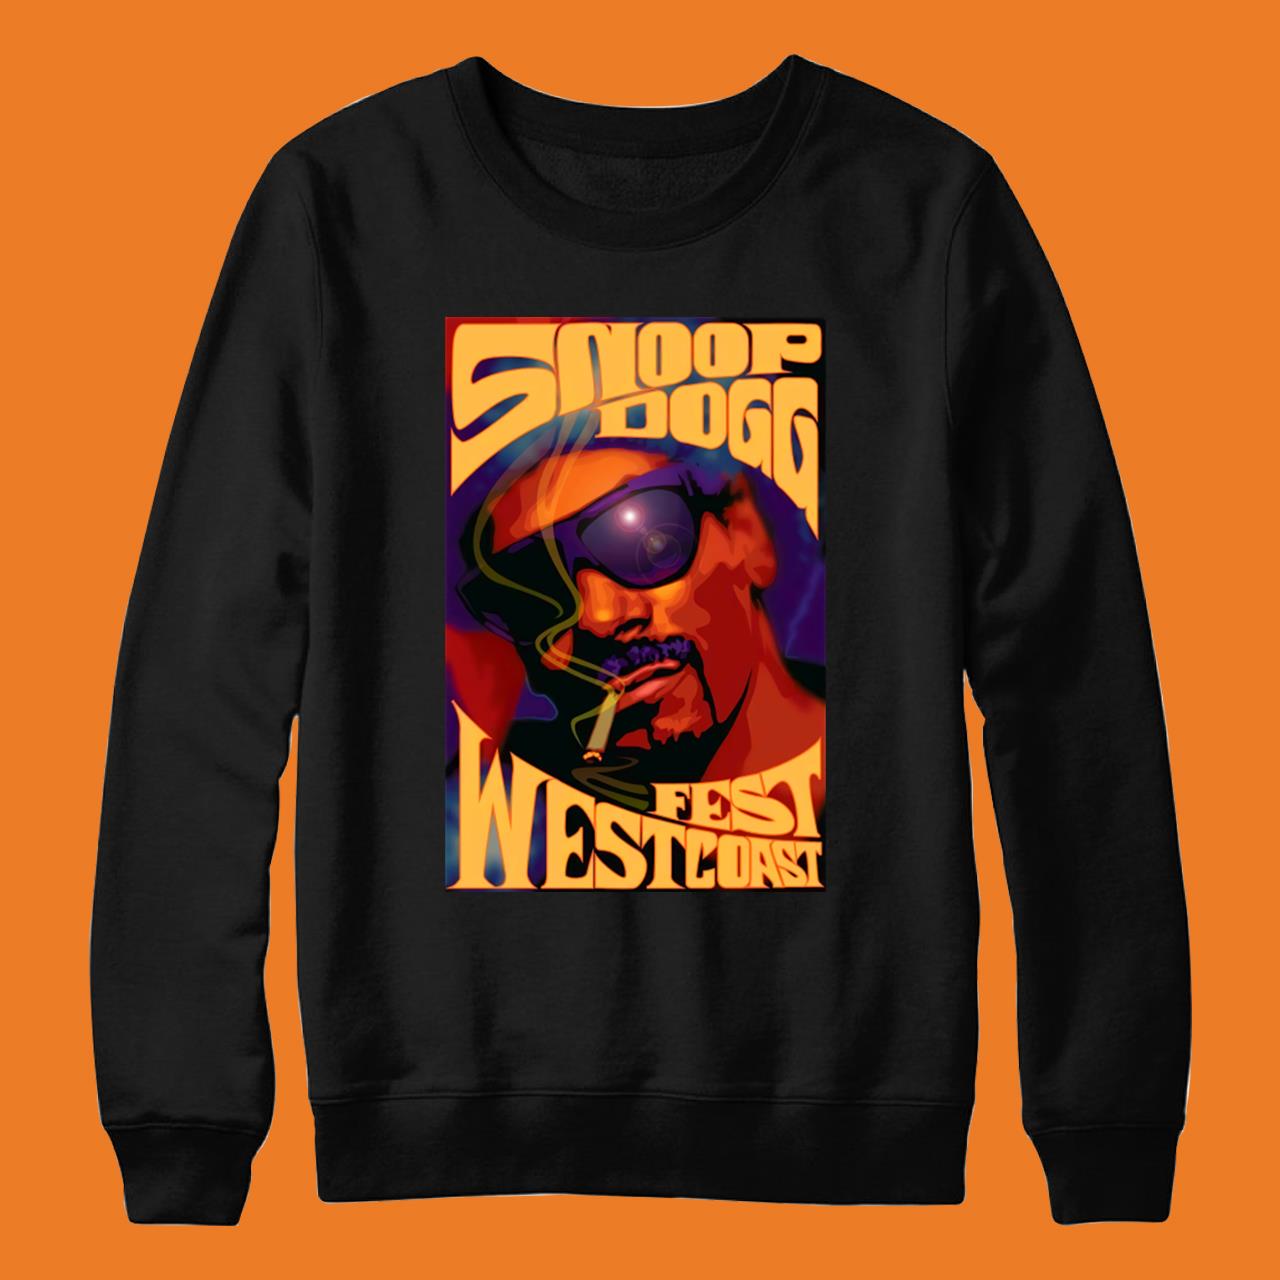 Snoop Dogg Fest Westcoast T-Shirt